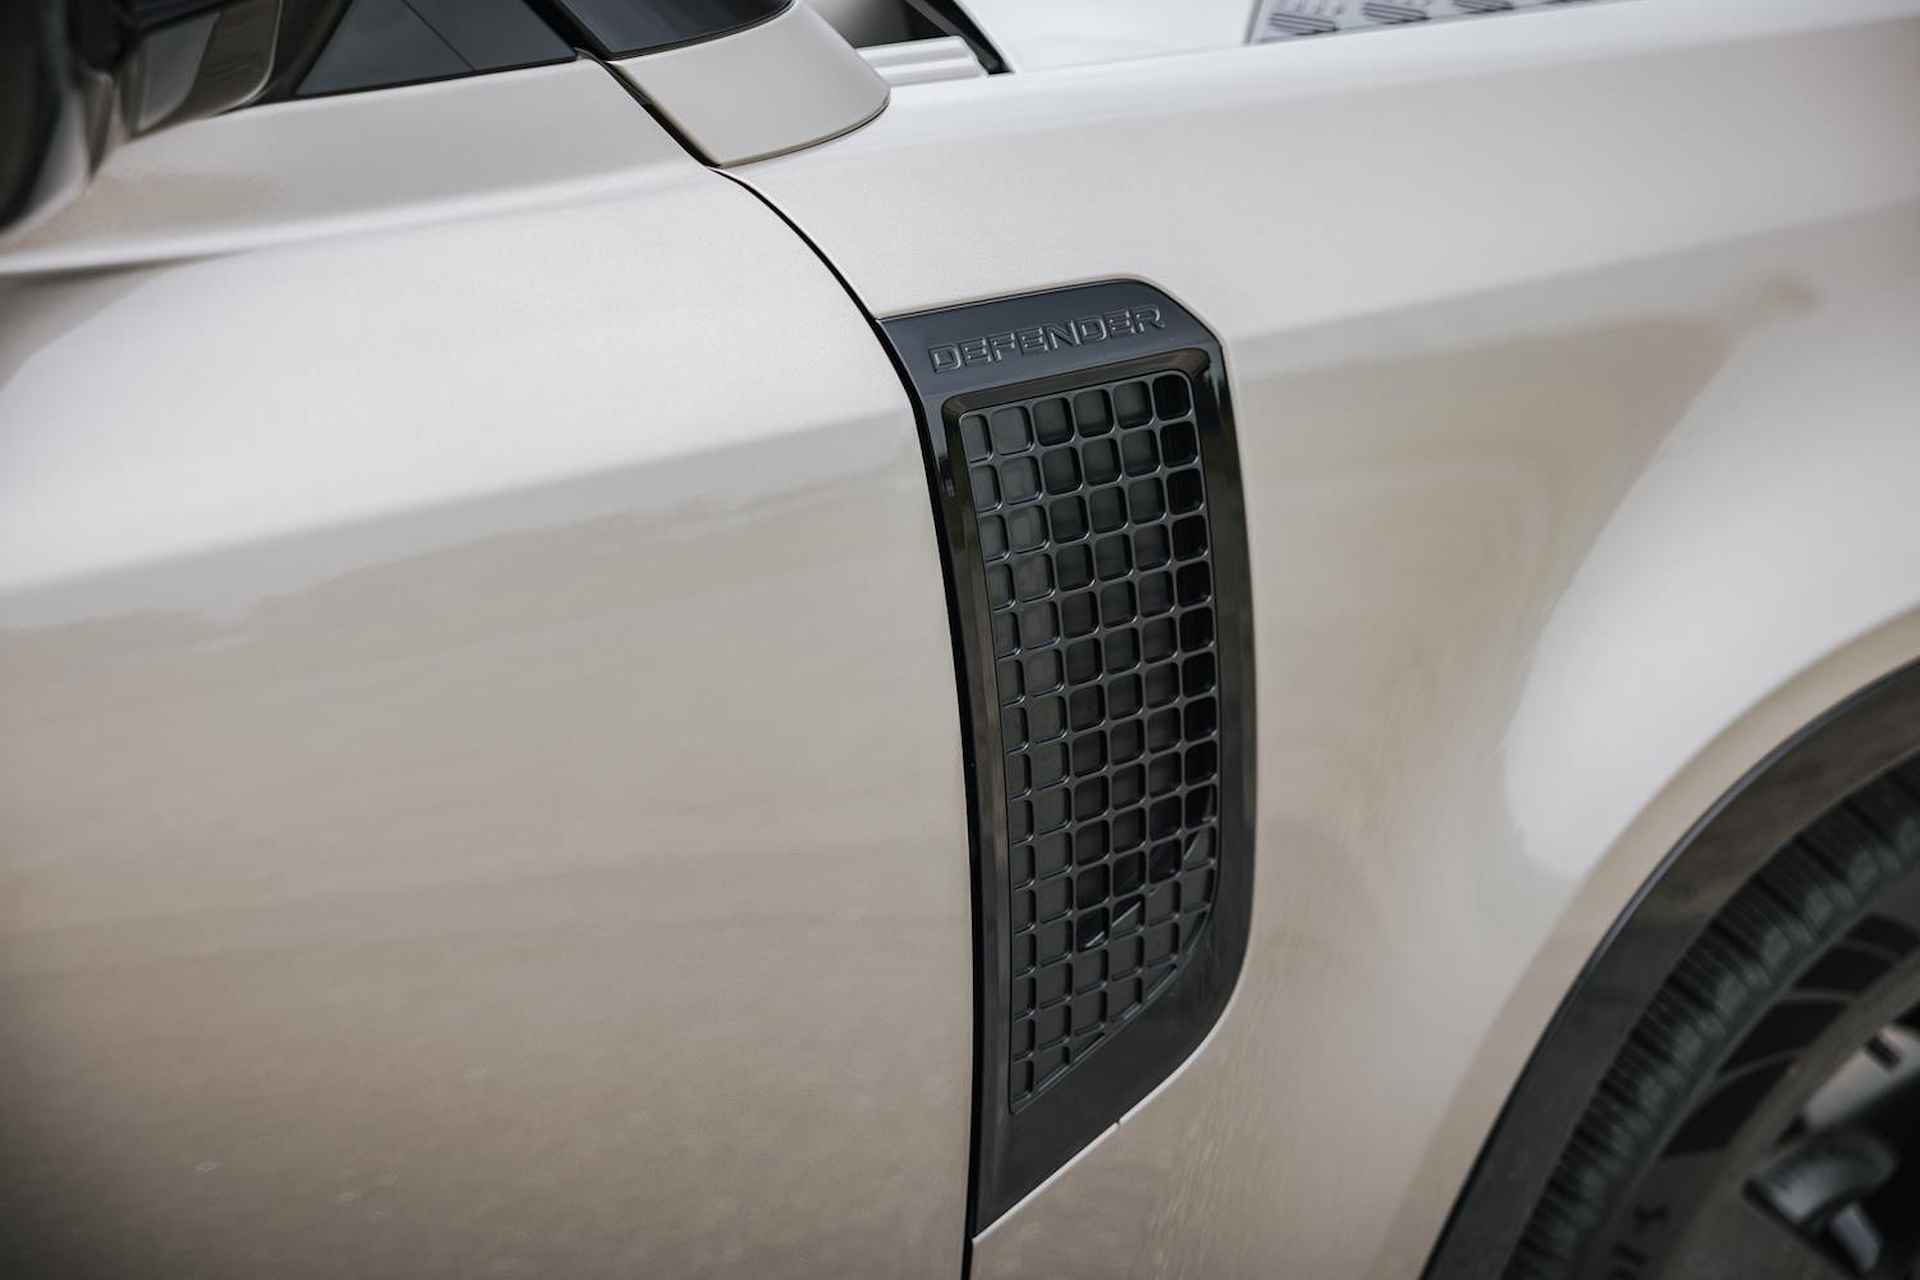 Land Rover Defender 2.0 P400e 110 X-Dynamic HSE | Panoramadak | 22" Velgen in Gloss Black | 11,4" Touch Screen | Cold Climate Pack | Elektrische Trekhaak | Expedition imperiaal | Uitklapbare Dakladder| All Season Banden - 13/43